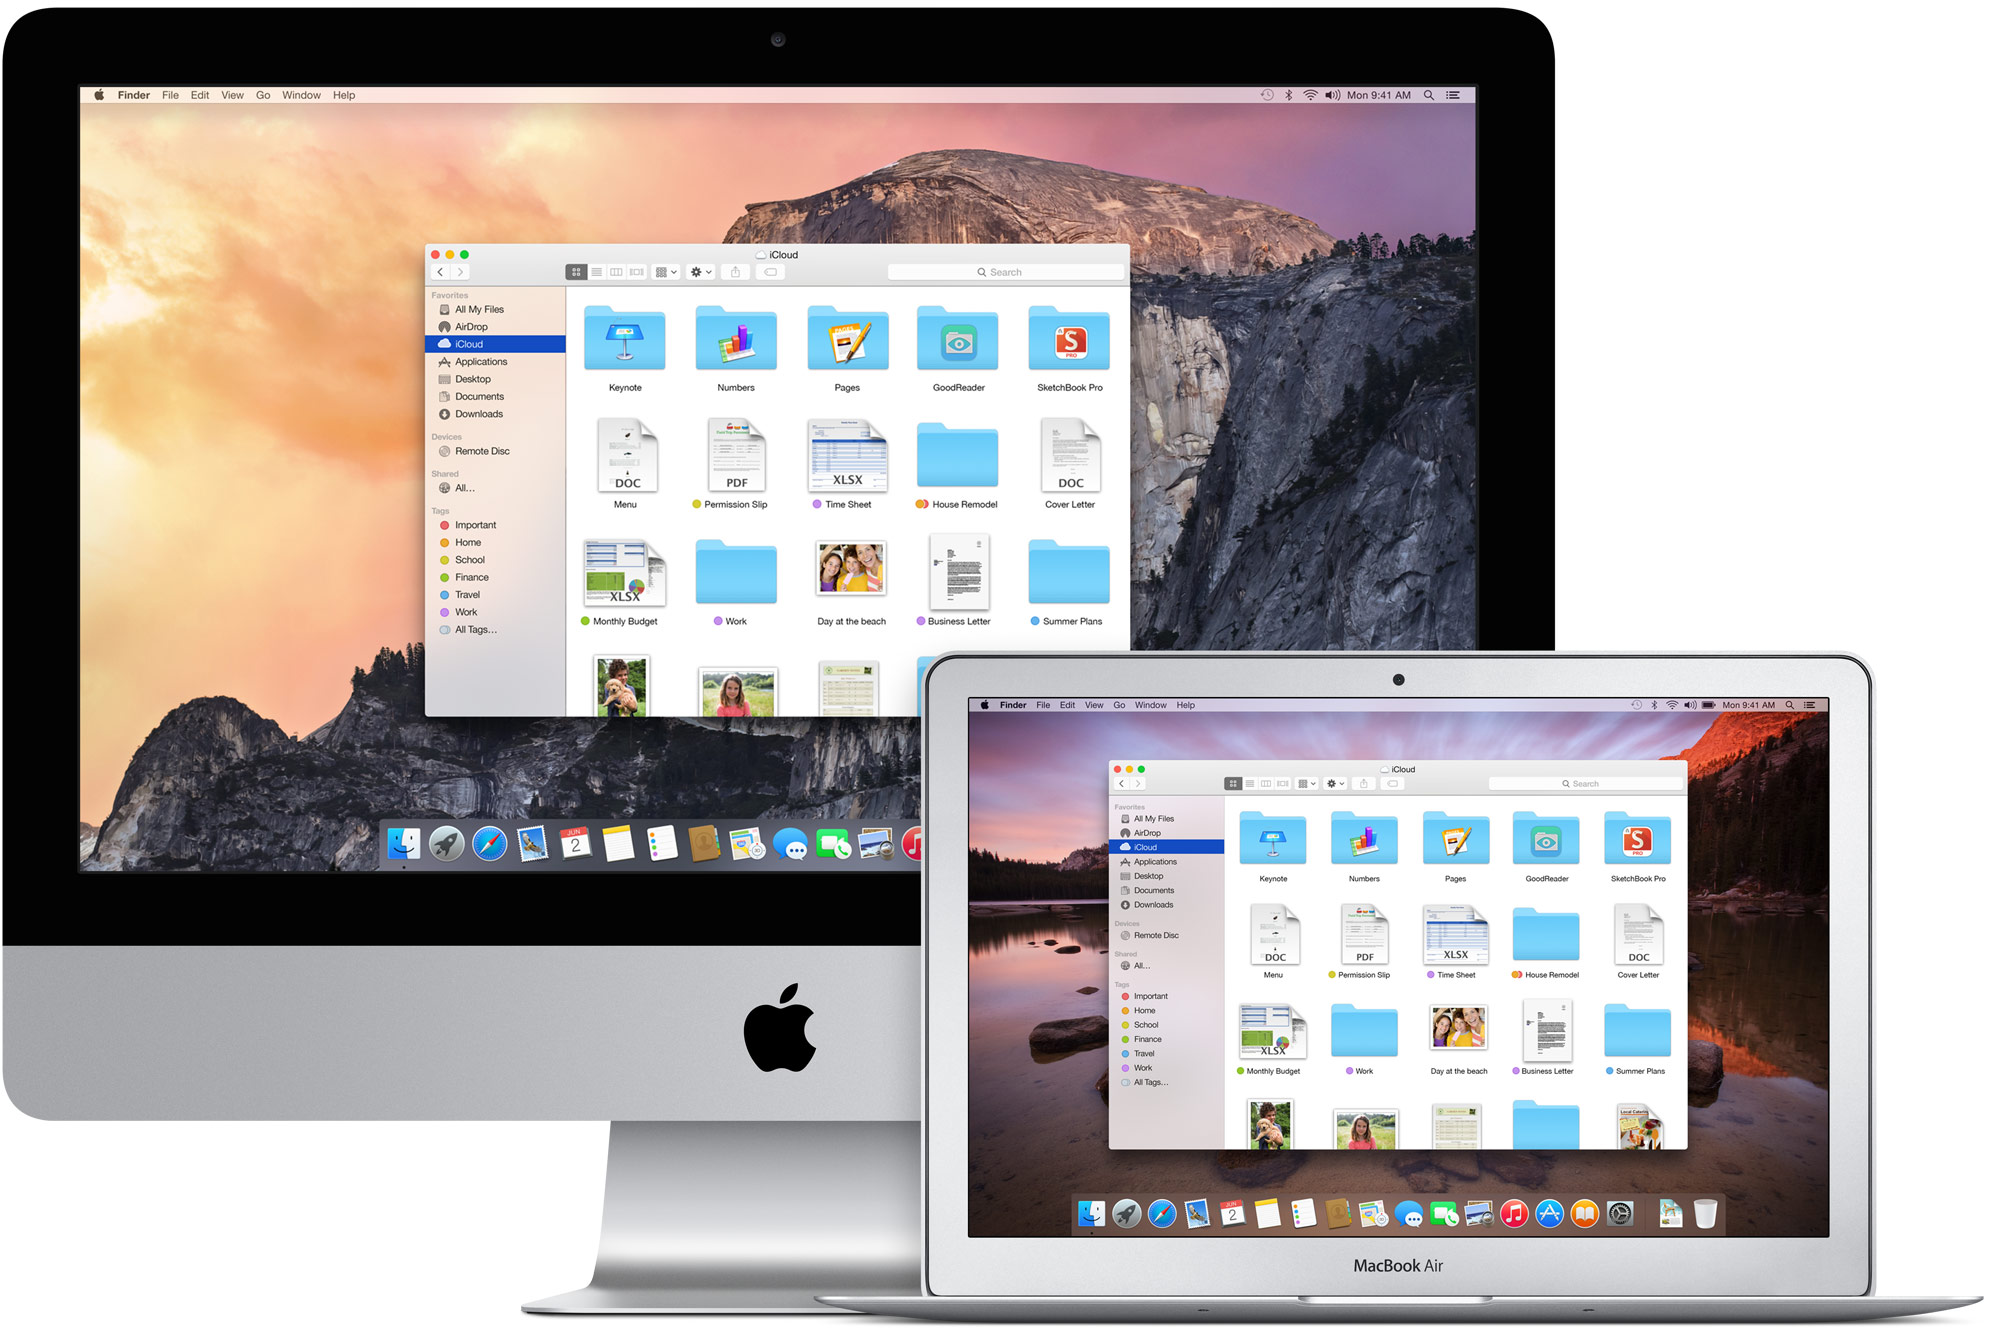 iCloud Drive on Mac